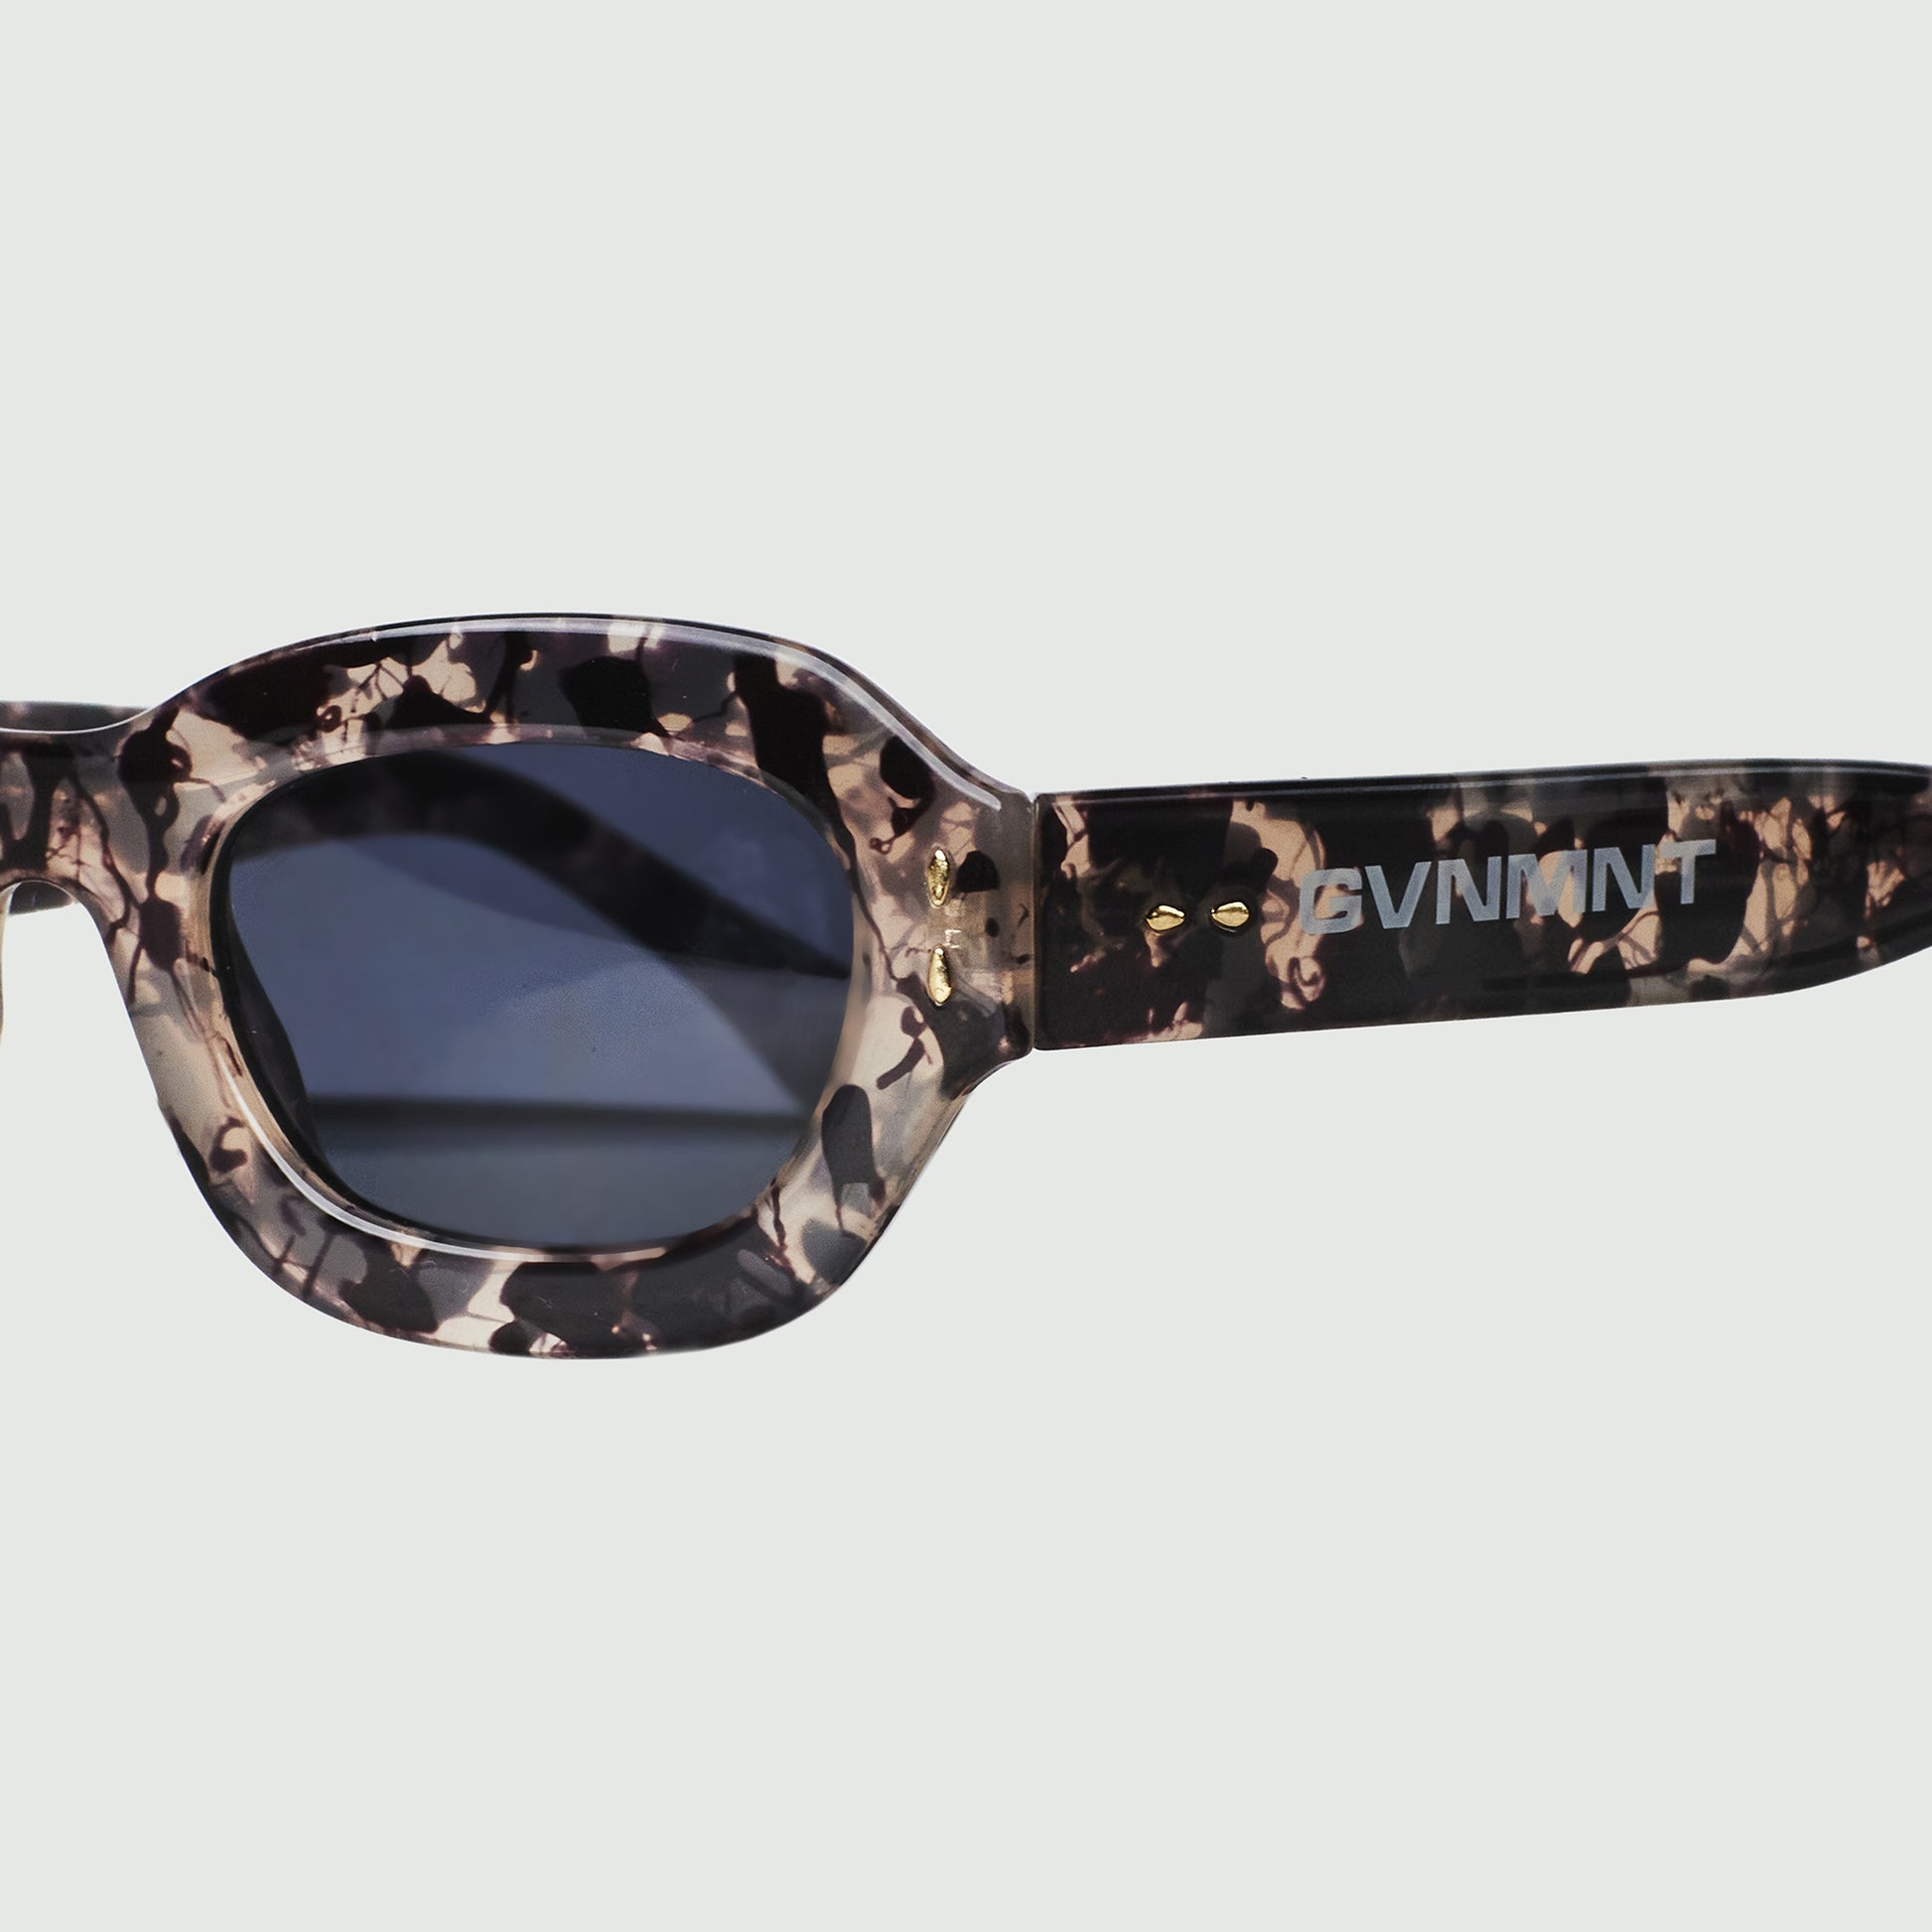 Vulcan Sunglasses - Marble - GVNMNT Clothing Co', European streetwear.